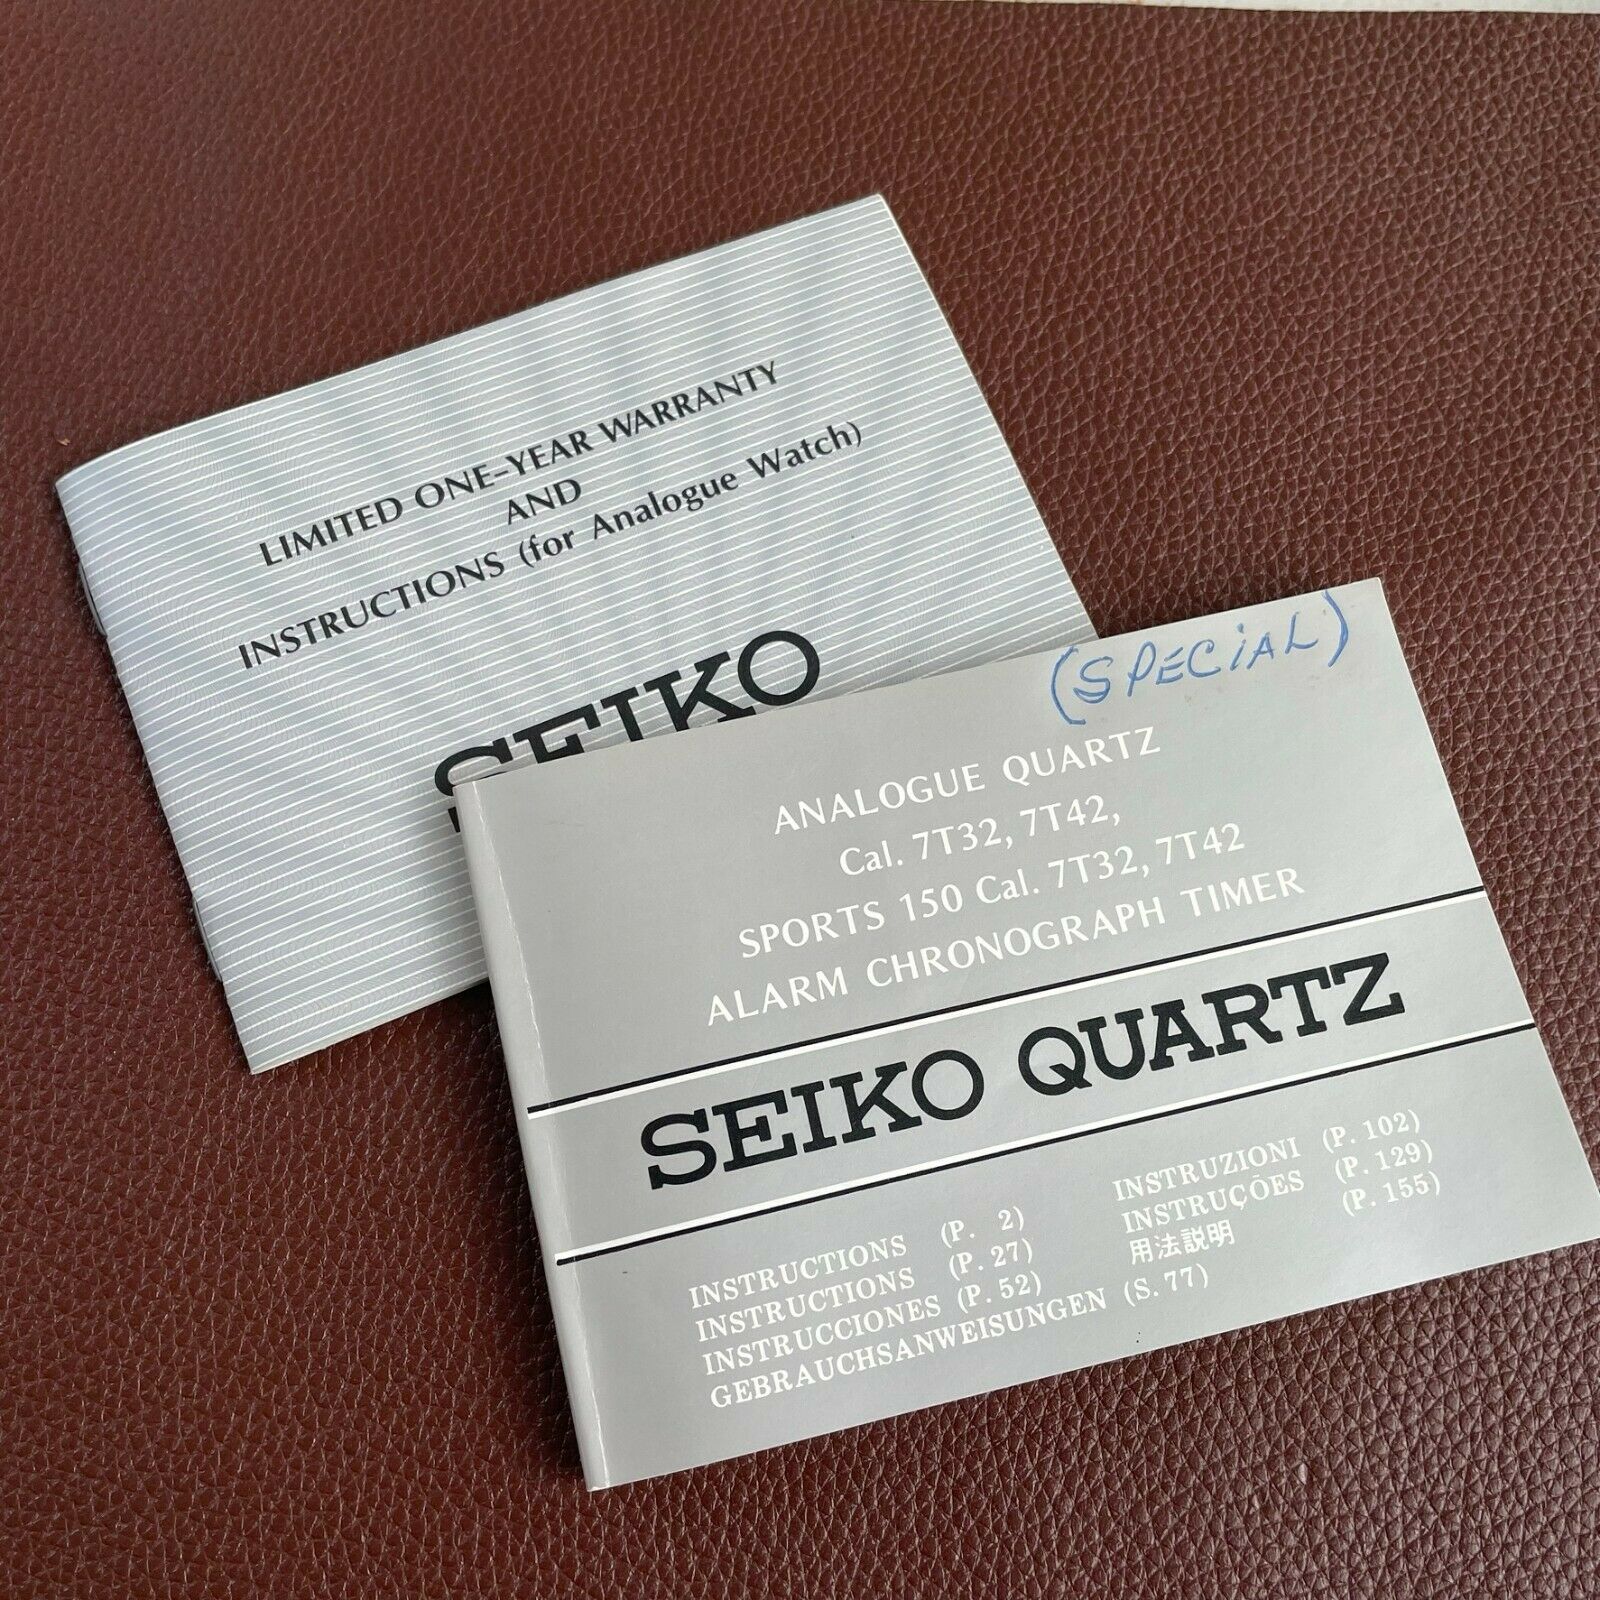 Seiko Quartz Chronograph 7T32, 7T42 Sports 150 Manual and Warranty Card |  WatchCharts